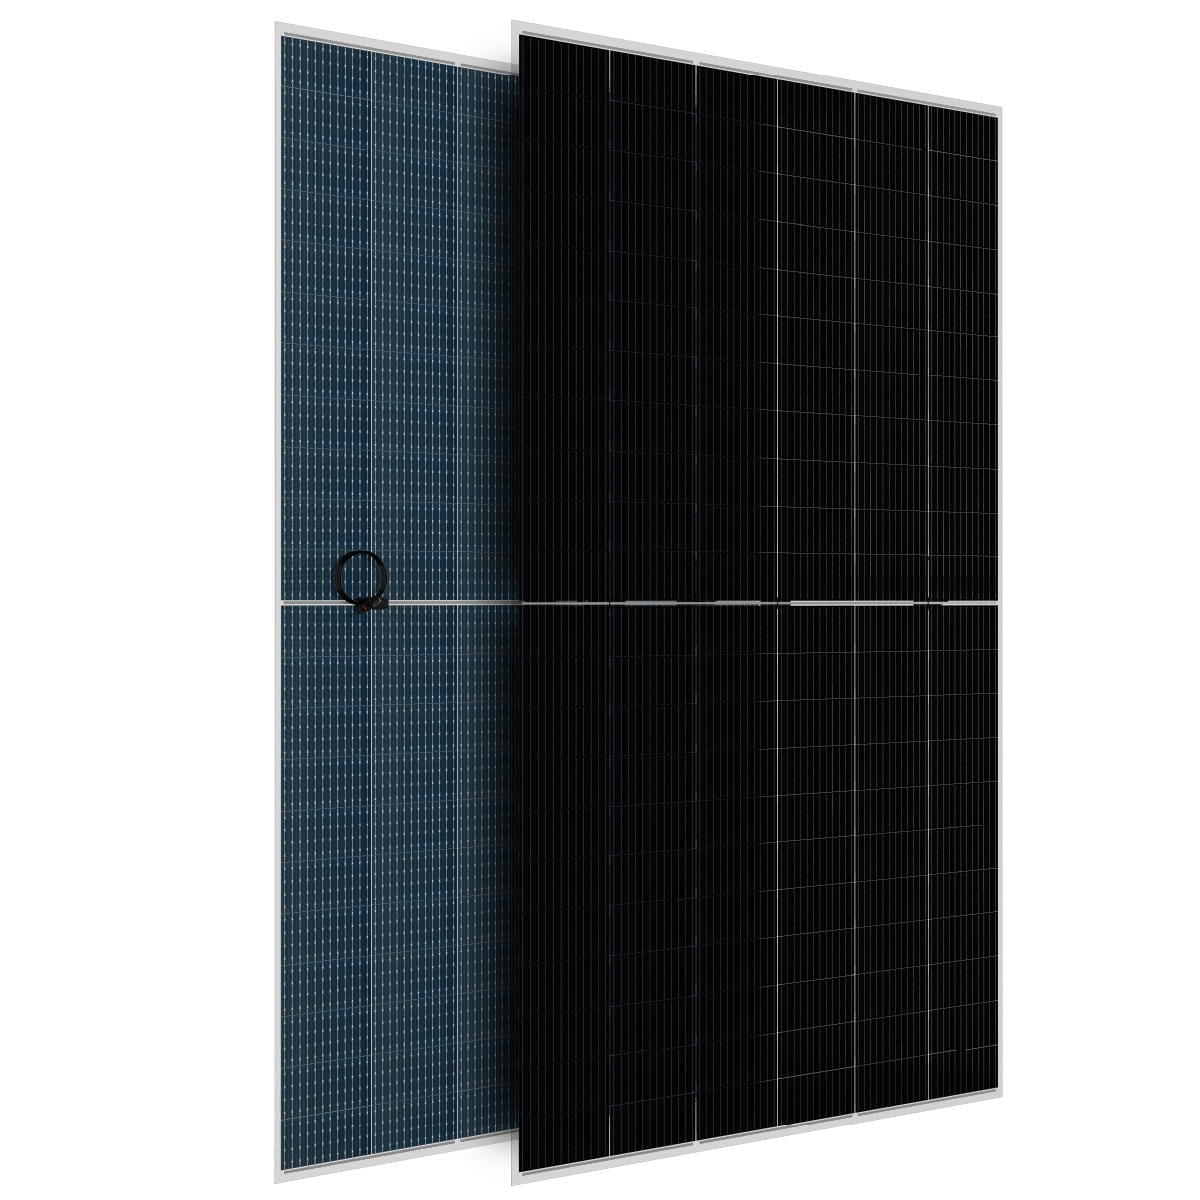 TommaTech 610Wp 120PMB M12 HC-MB G2G Solar Panel